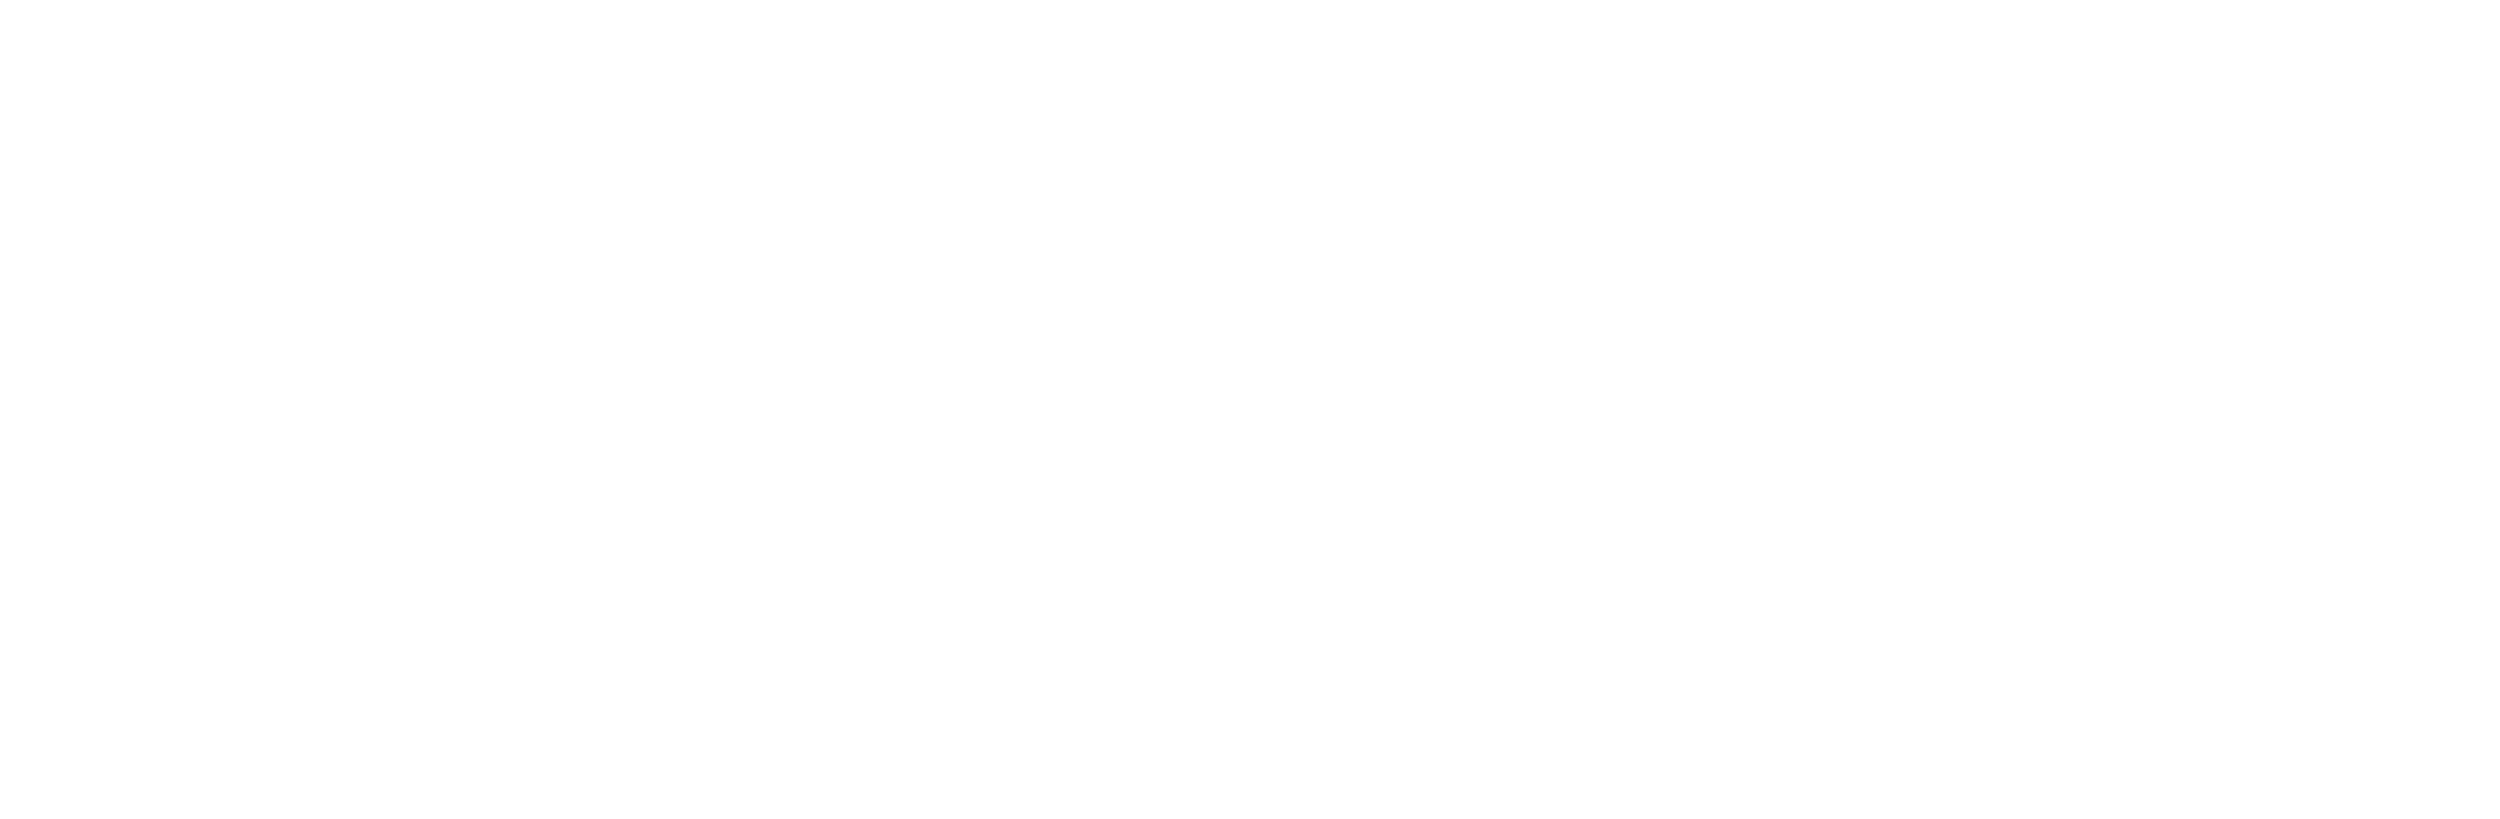 Fishburne Photographic